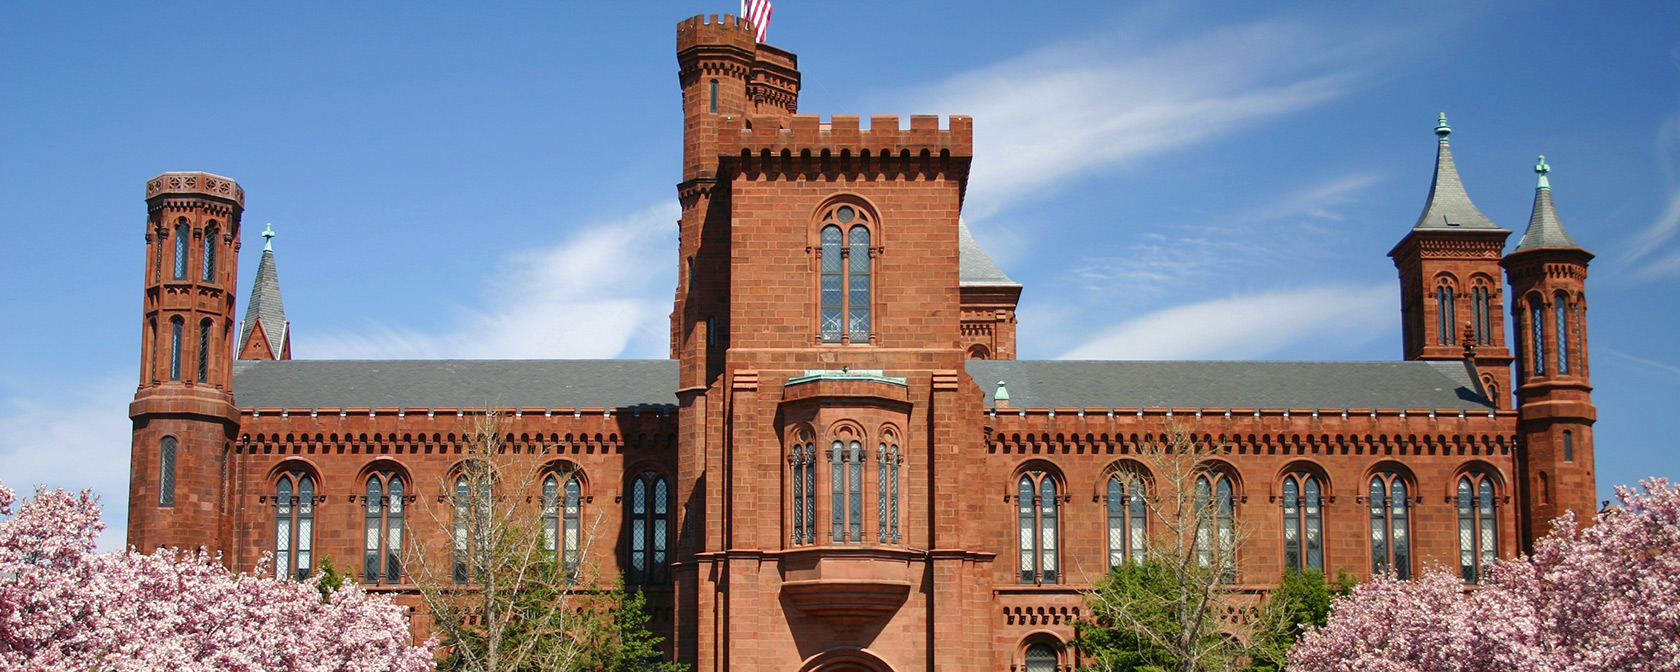 Castelo Smithsonian